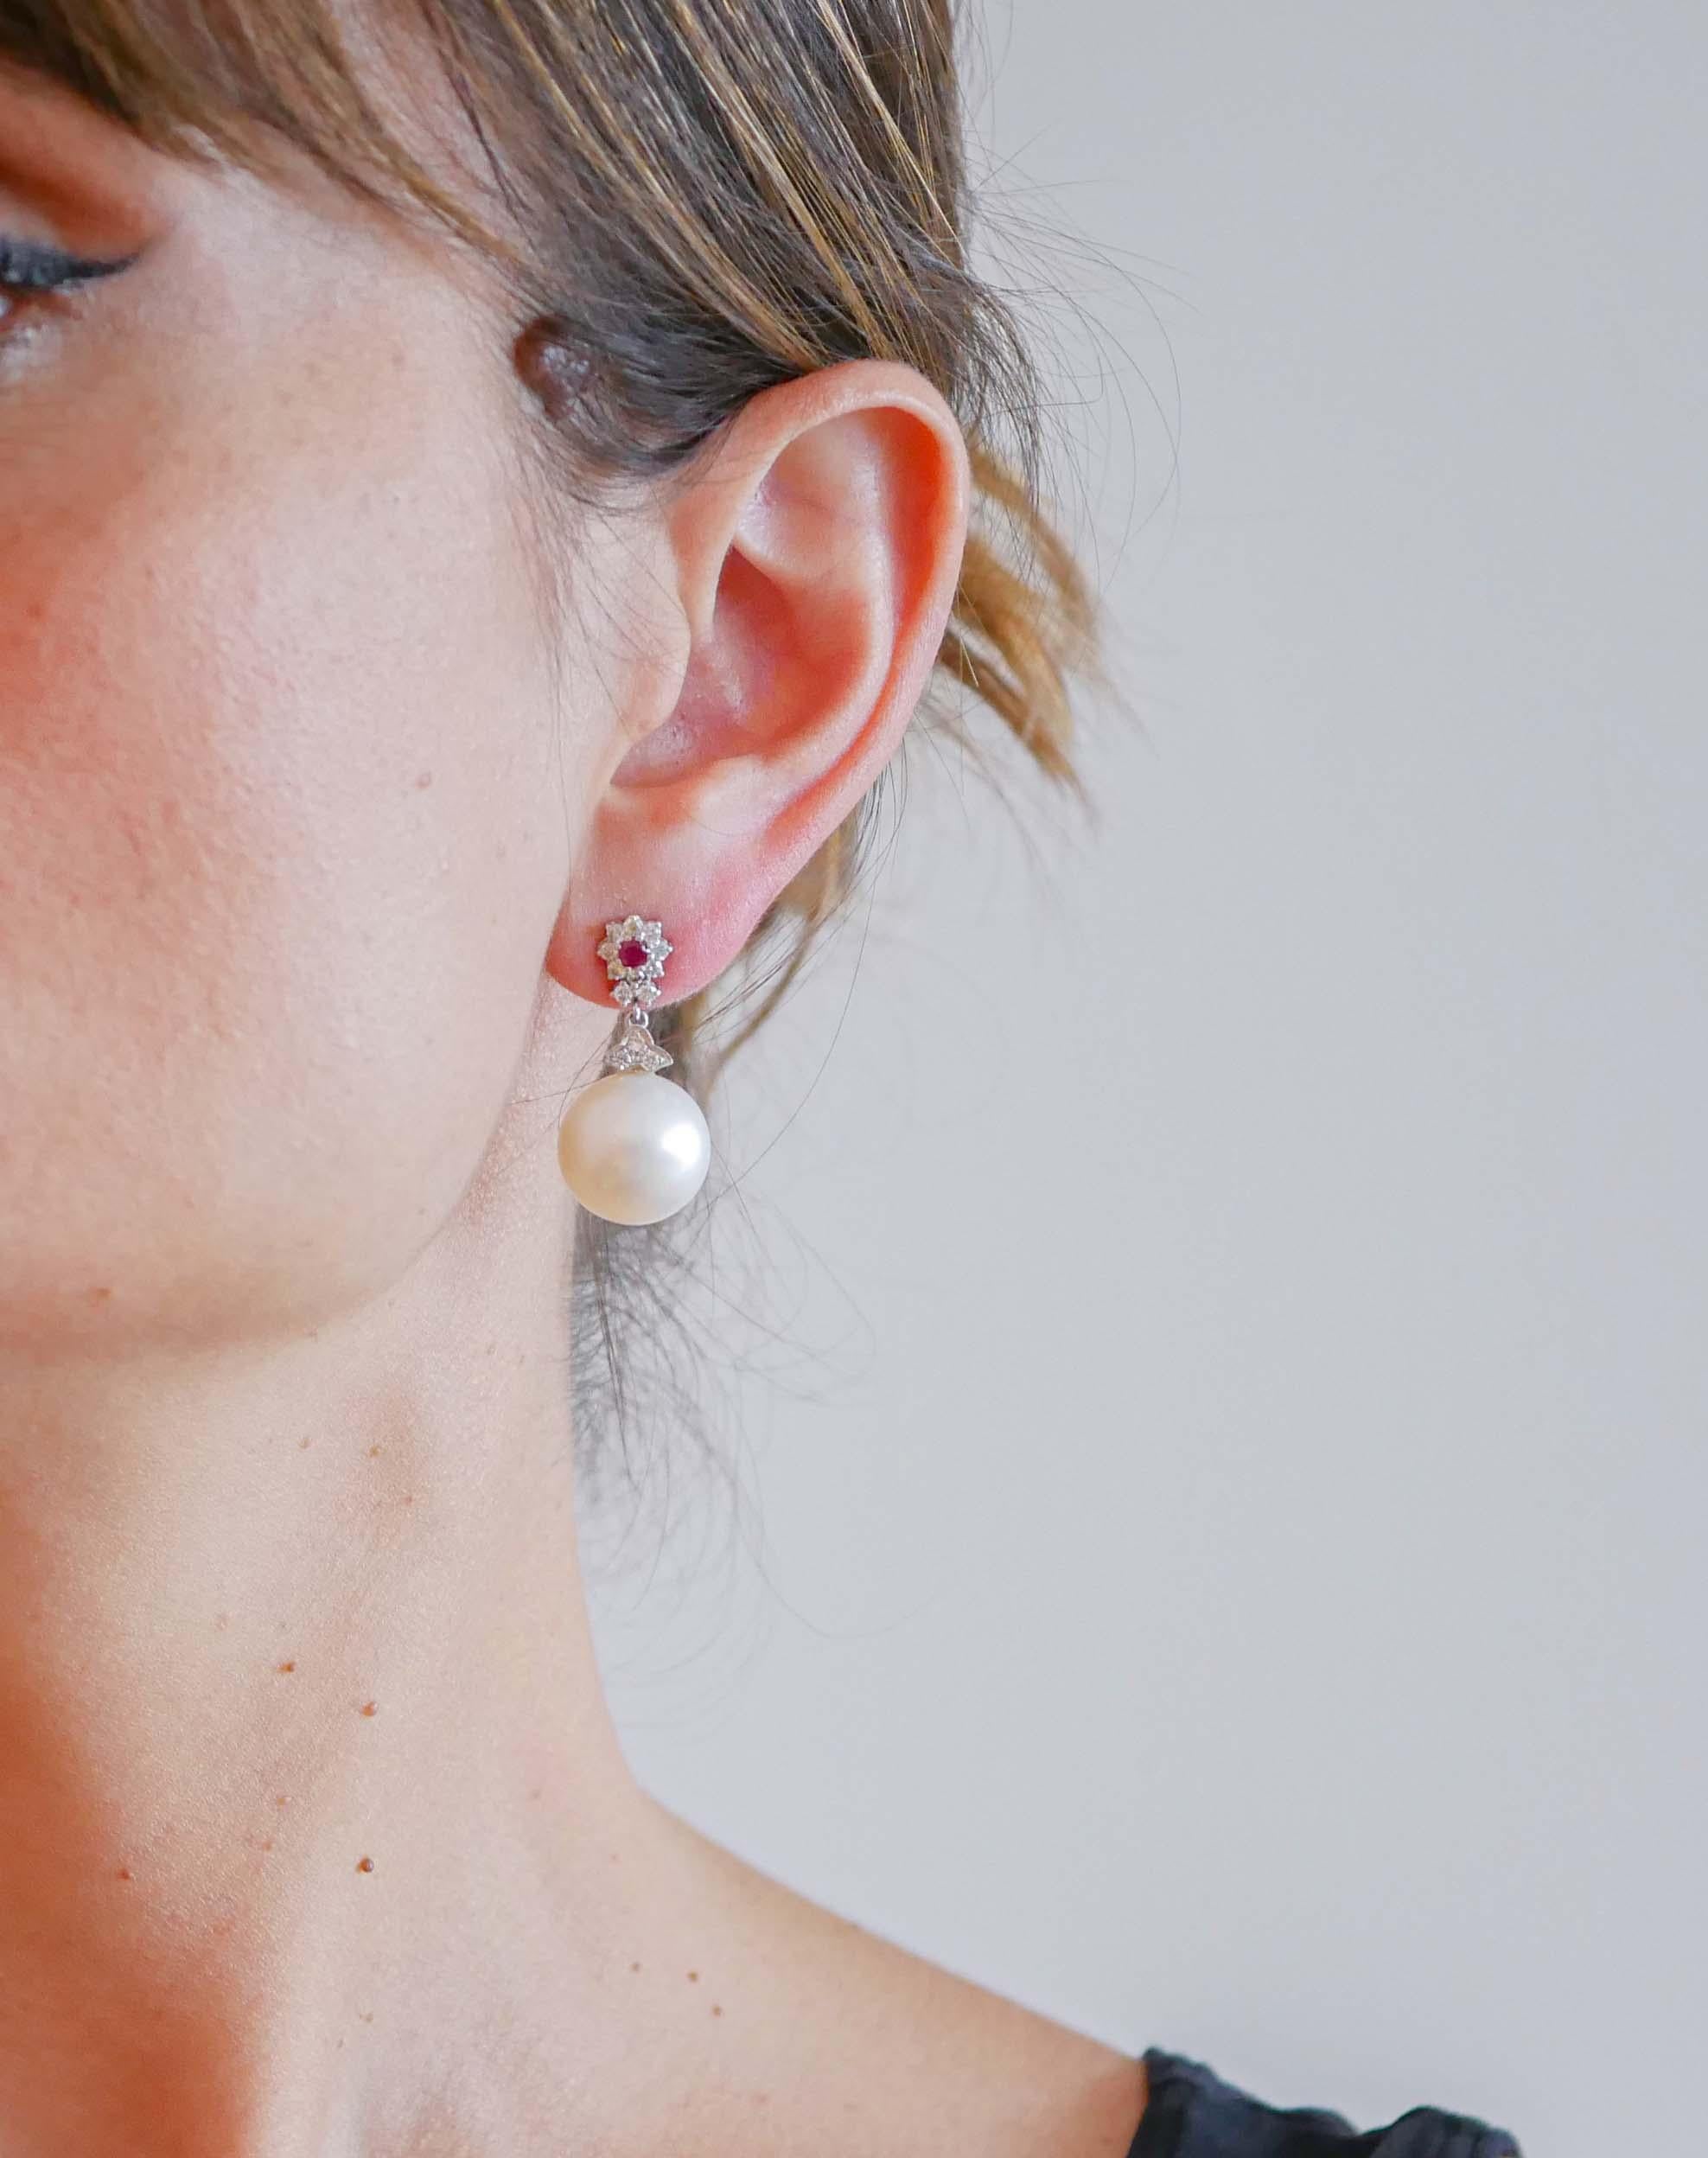 Mixed Cut South-Sea Pearl, Rubies, Diamonds, 14 Karat White Gold Earrings. For Sale